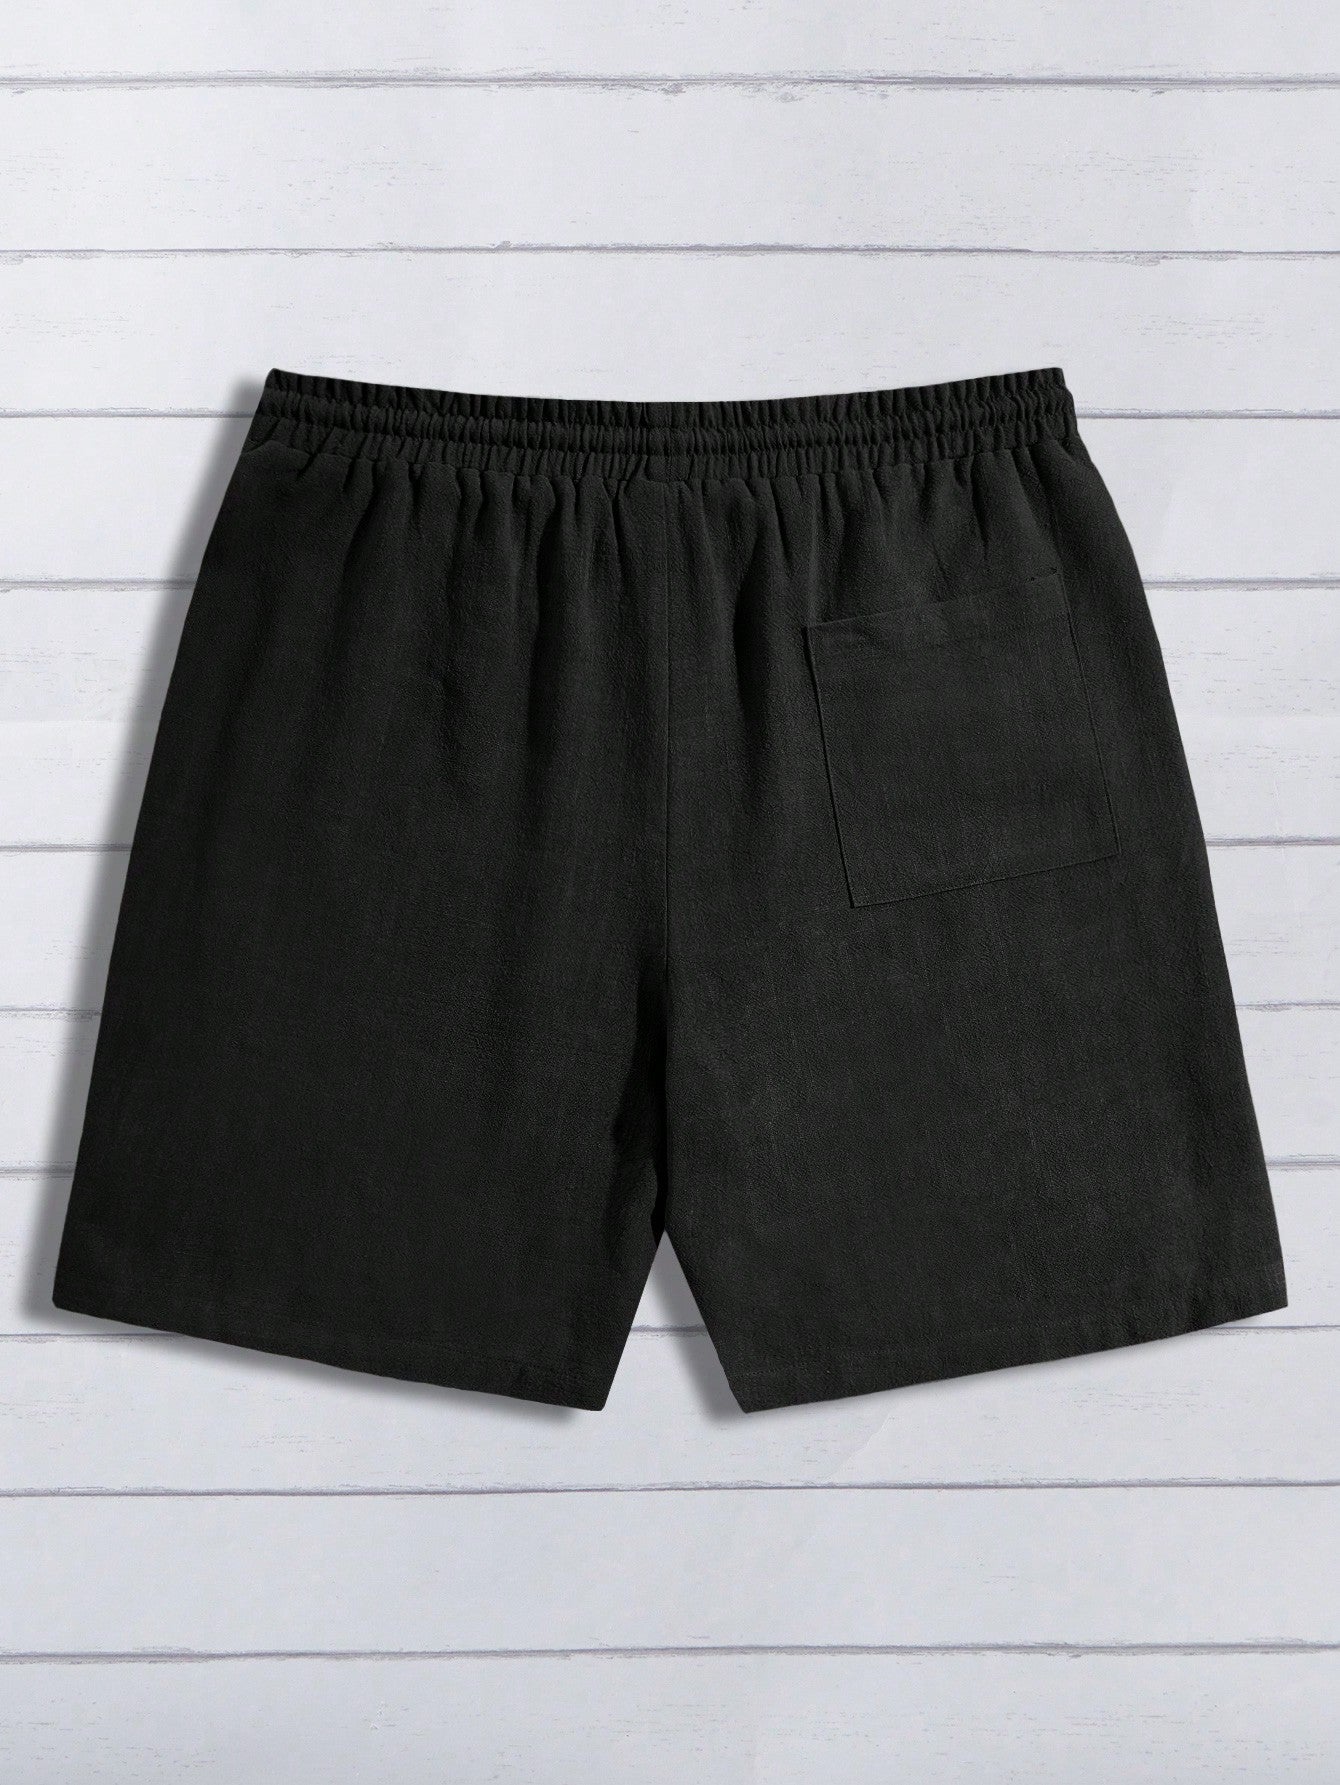 Men's Stylish Drawstring Waist Shorts.